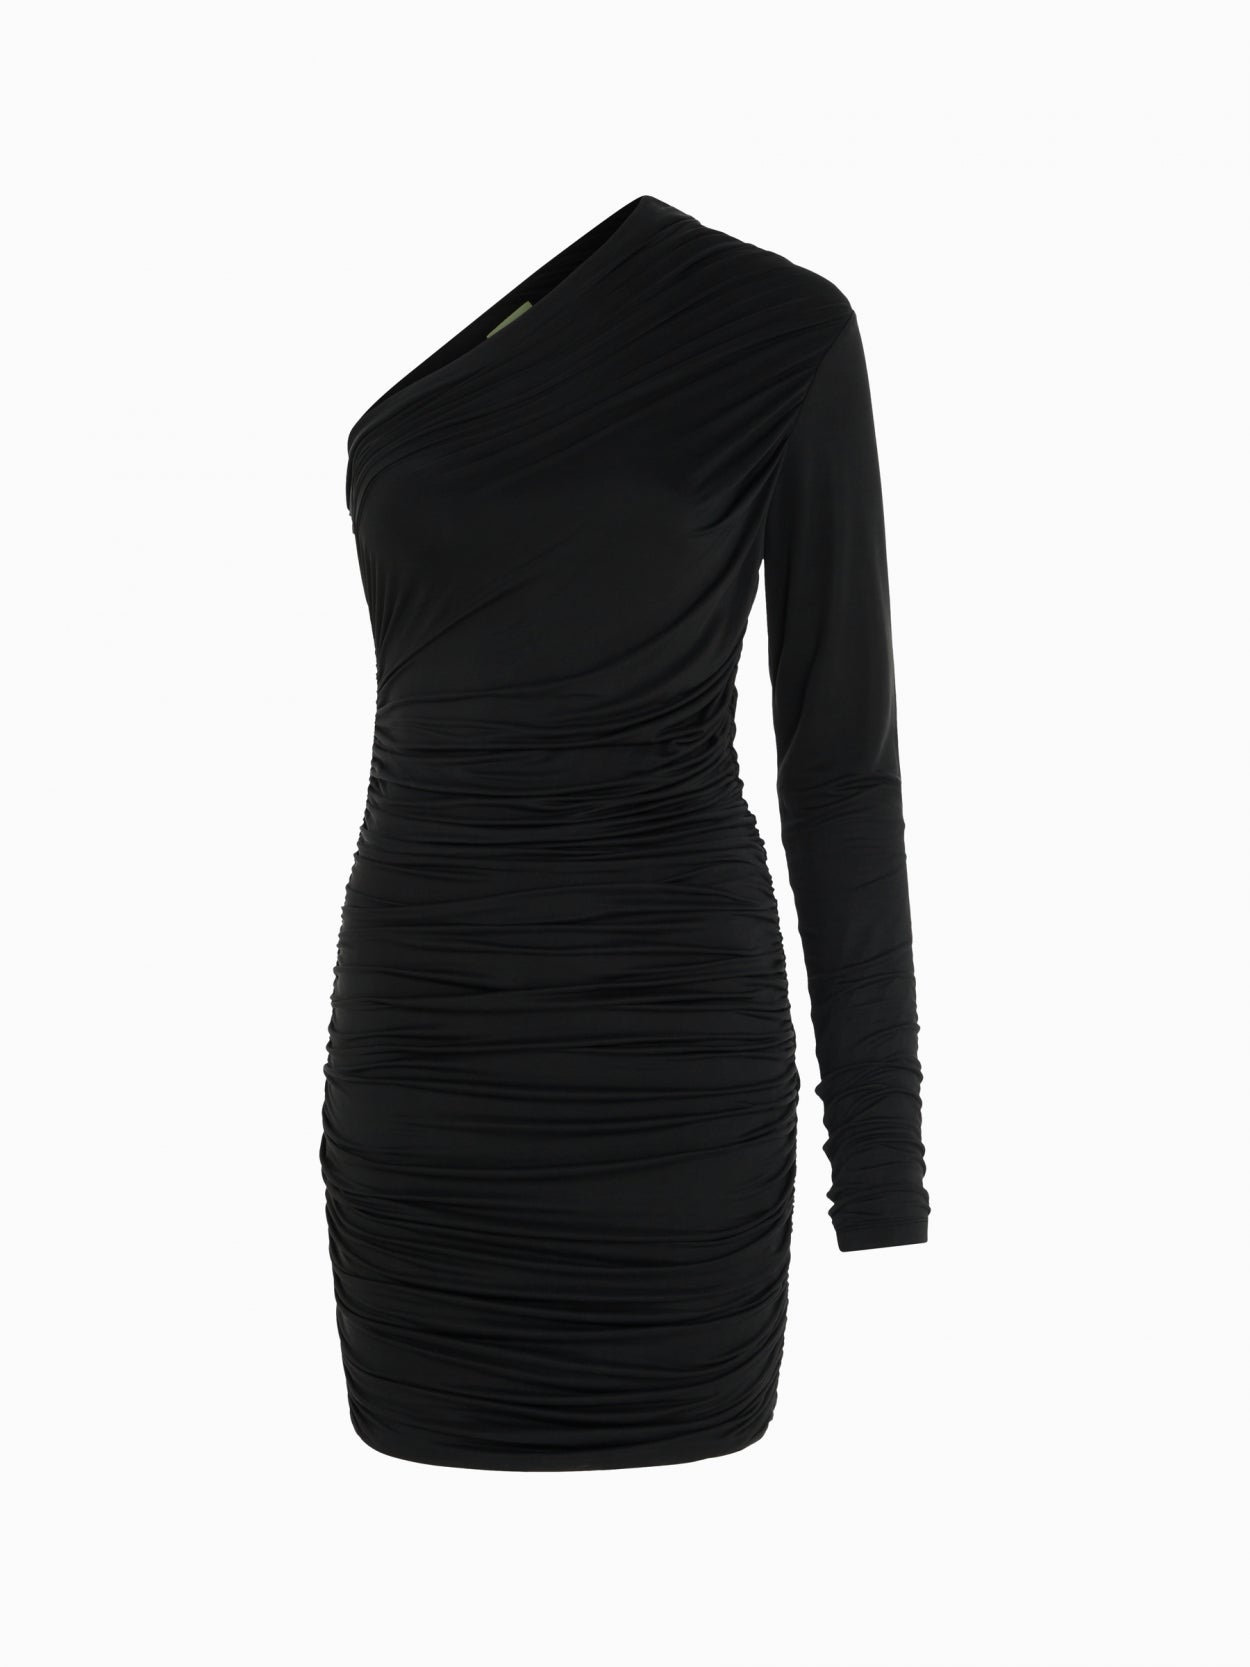 front packshot of a one sleeve black draped dress